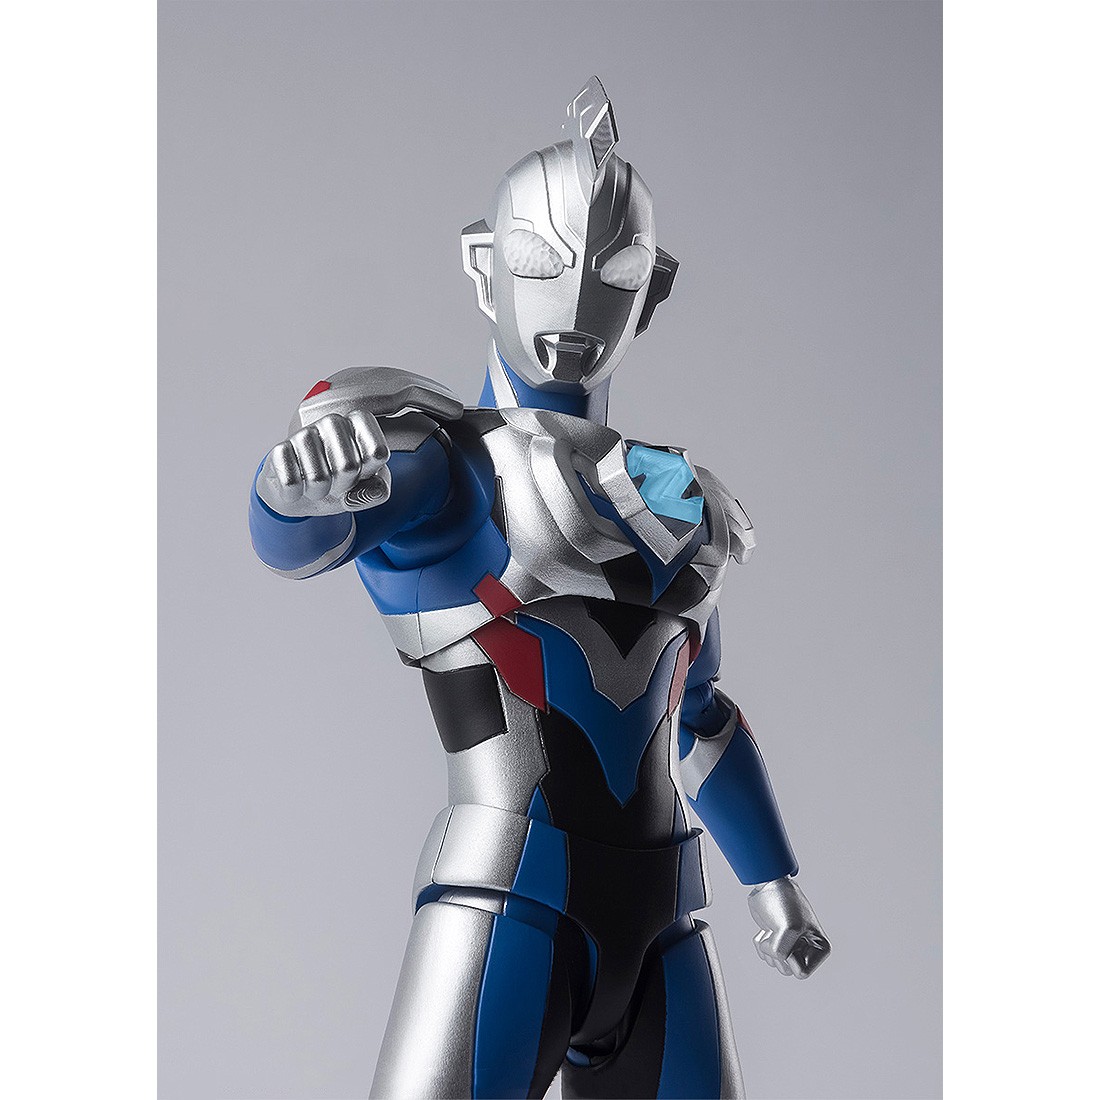 Bandai S.H.Figuarts Ultraman Z - Ultraman Z Original Figure (blue)